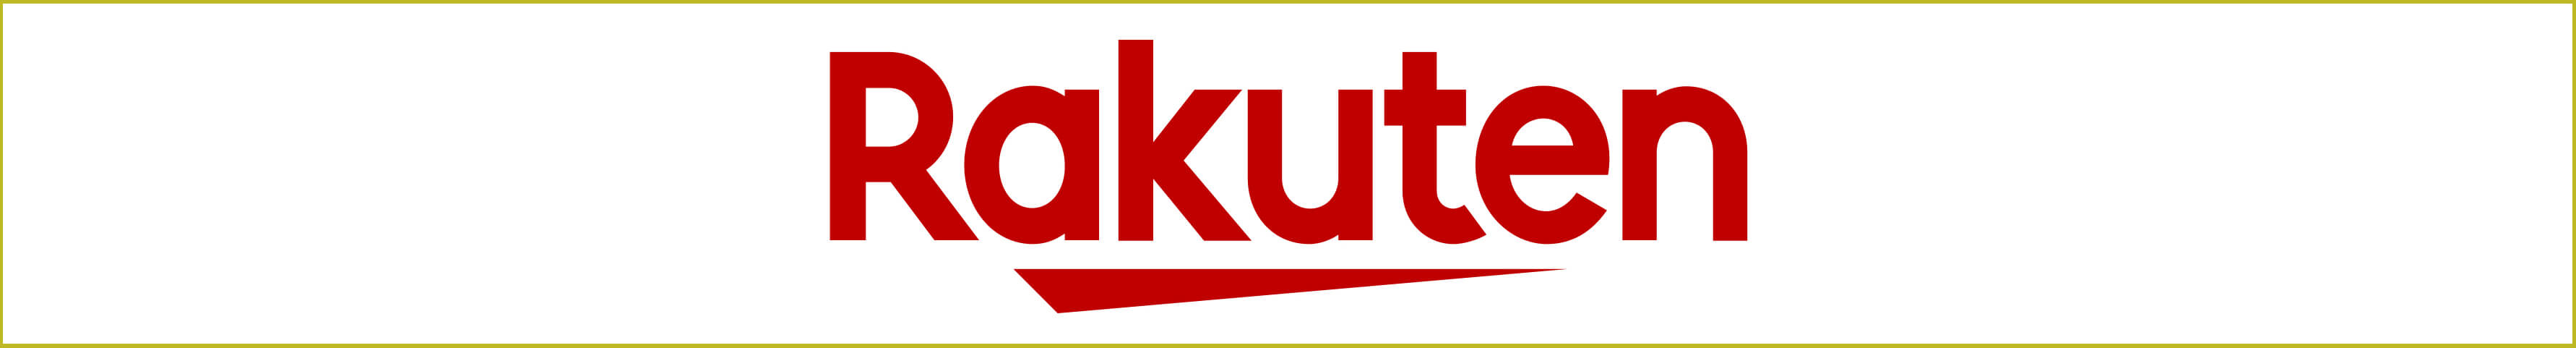 Rakuten-logo-long